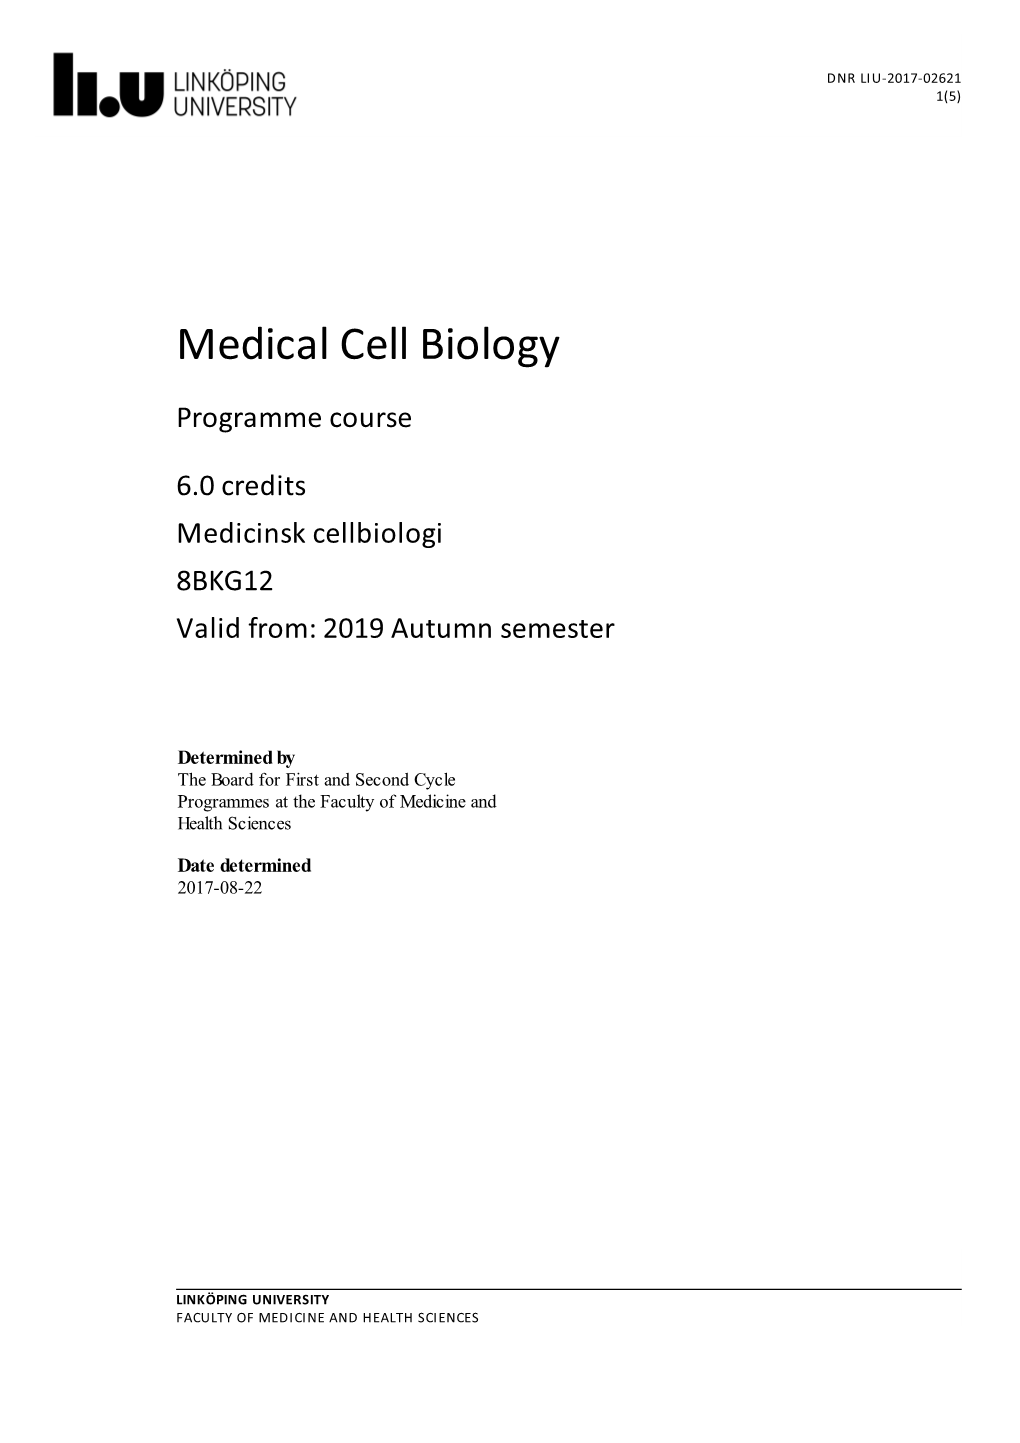 Medical Cell Biology Programme Course 6.0 Credits Medicinsk Cellbiologi 8BKG12 Valid From: 2019 Autumn Semester